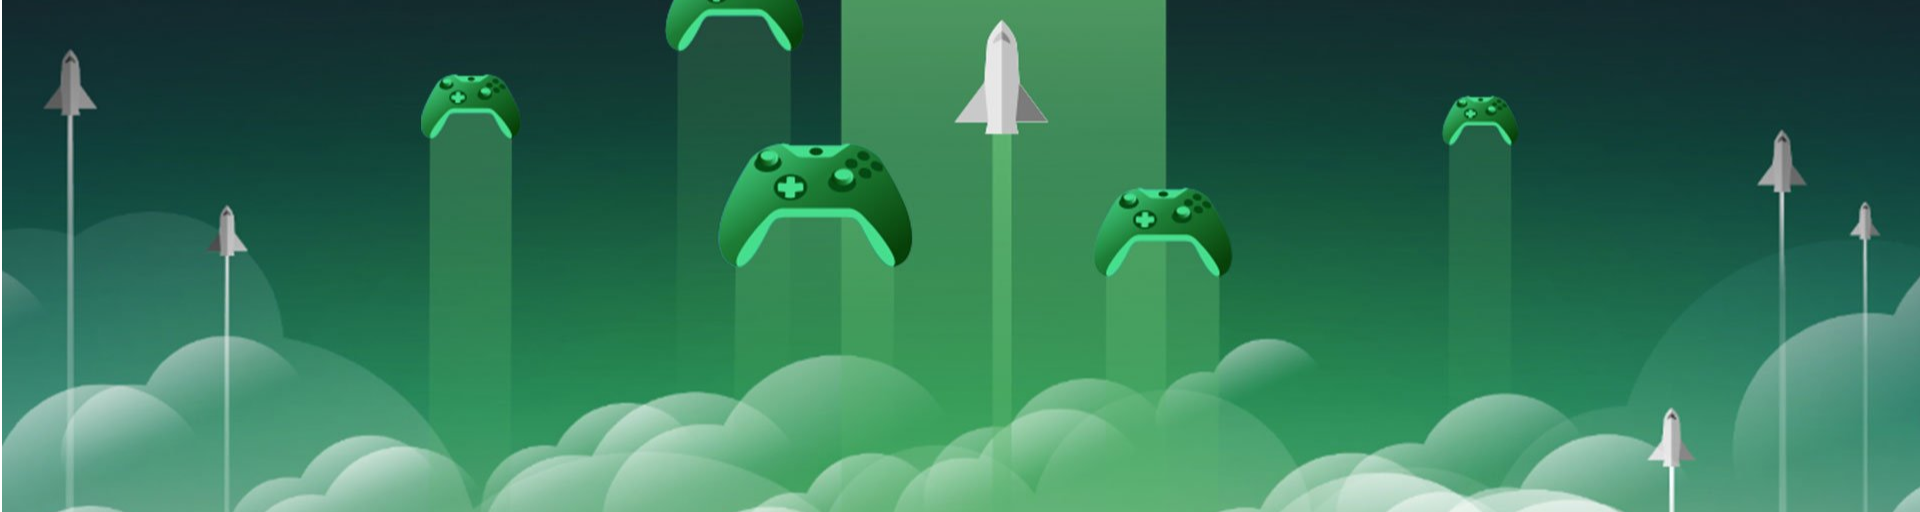 Xbox Game Pass - 14 days Trial XBOX One bg